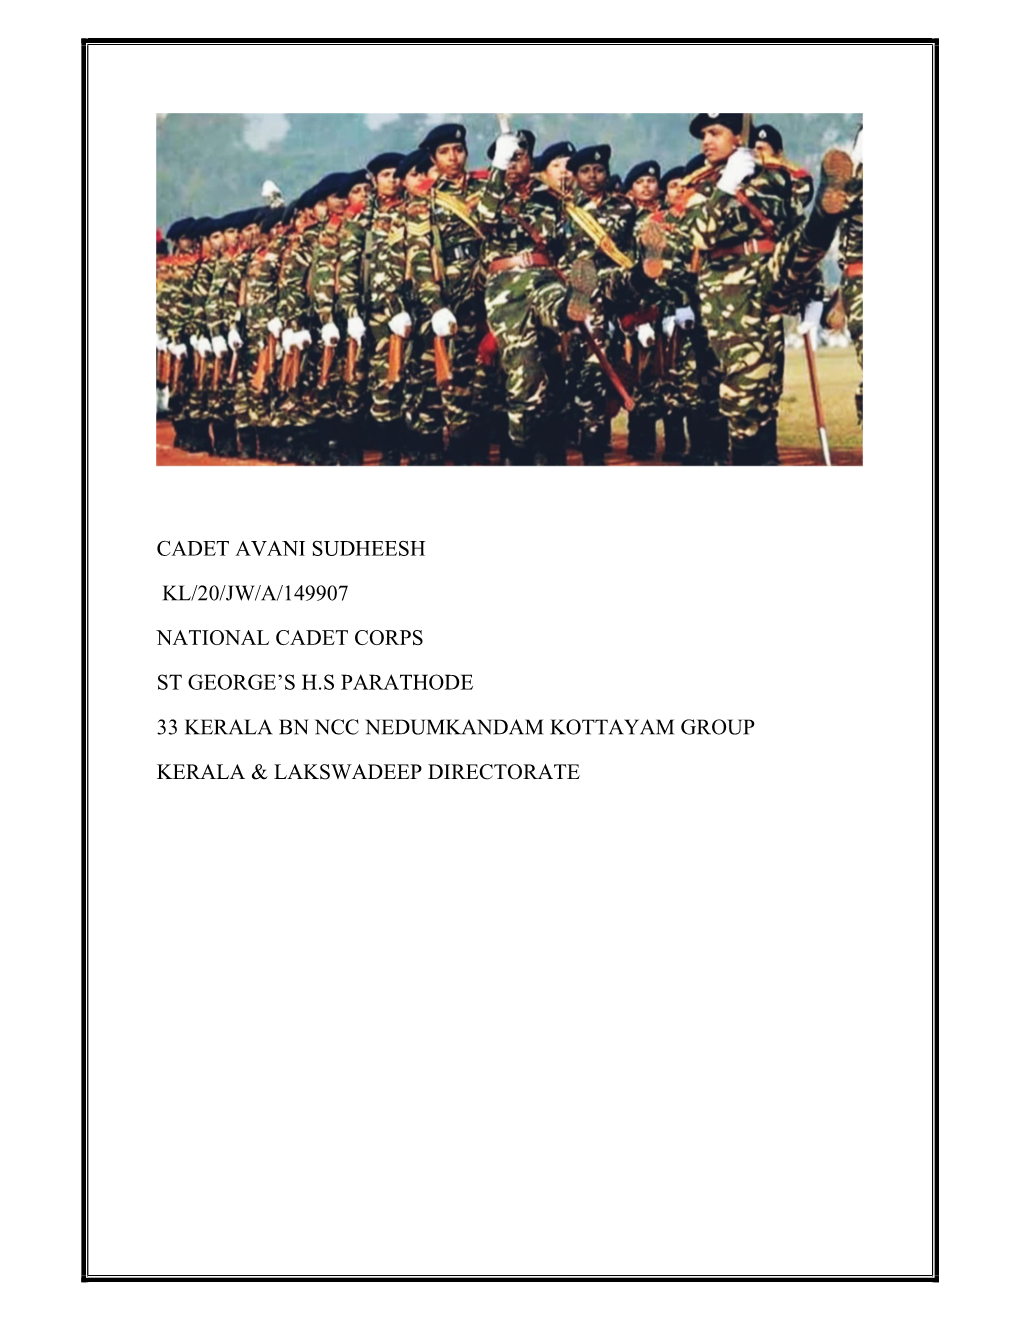 Cadet Avani Sudheesh Kl/20/Jw/A/149907 National